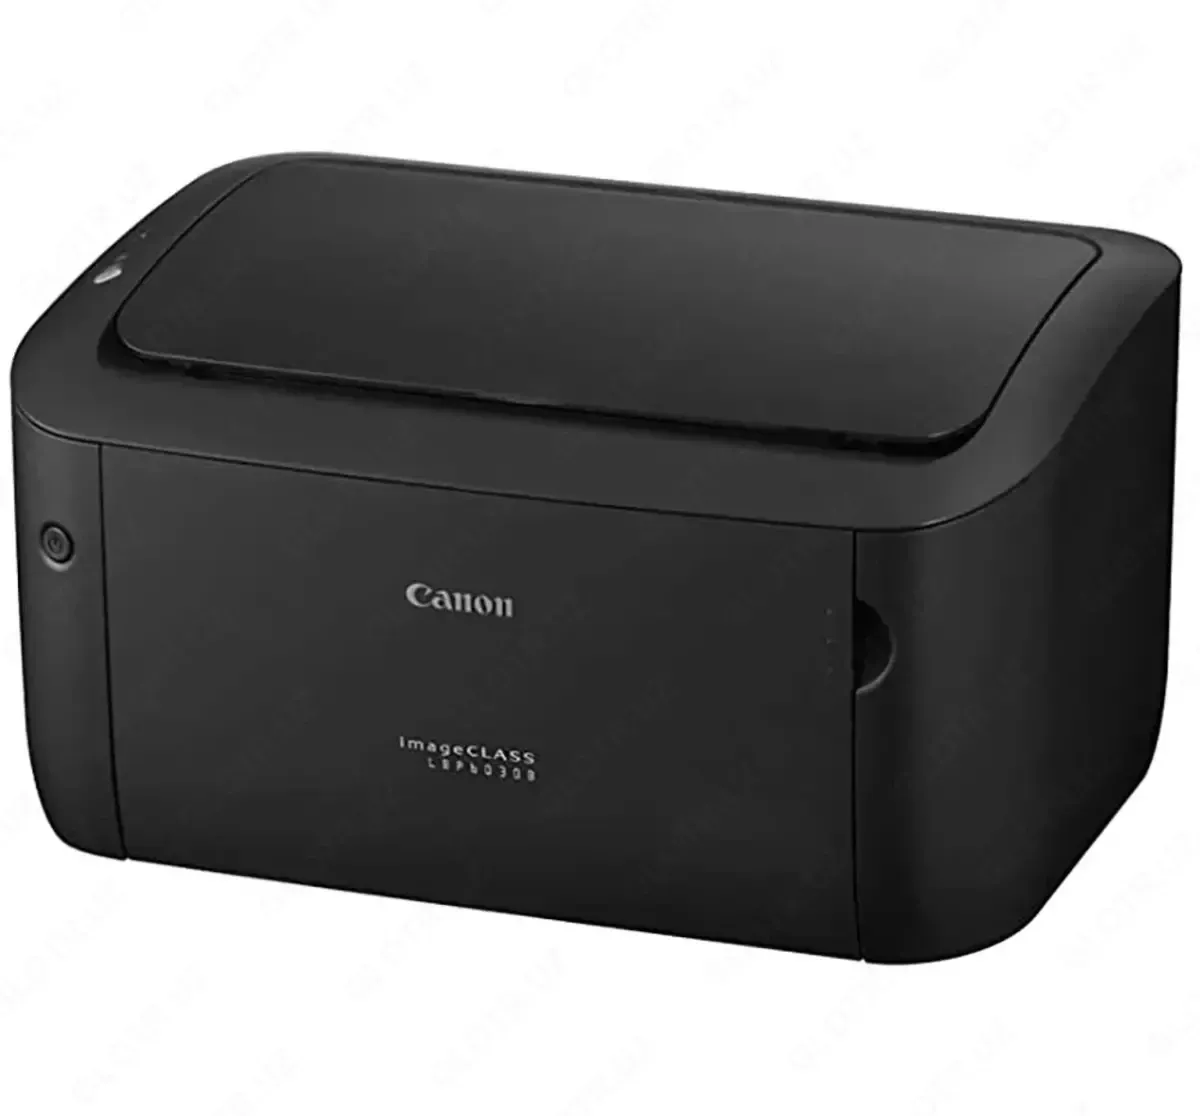 Lazer printeri Canon ImageClass LBP 6030B#1